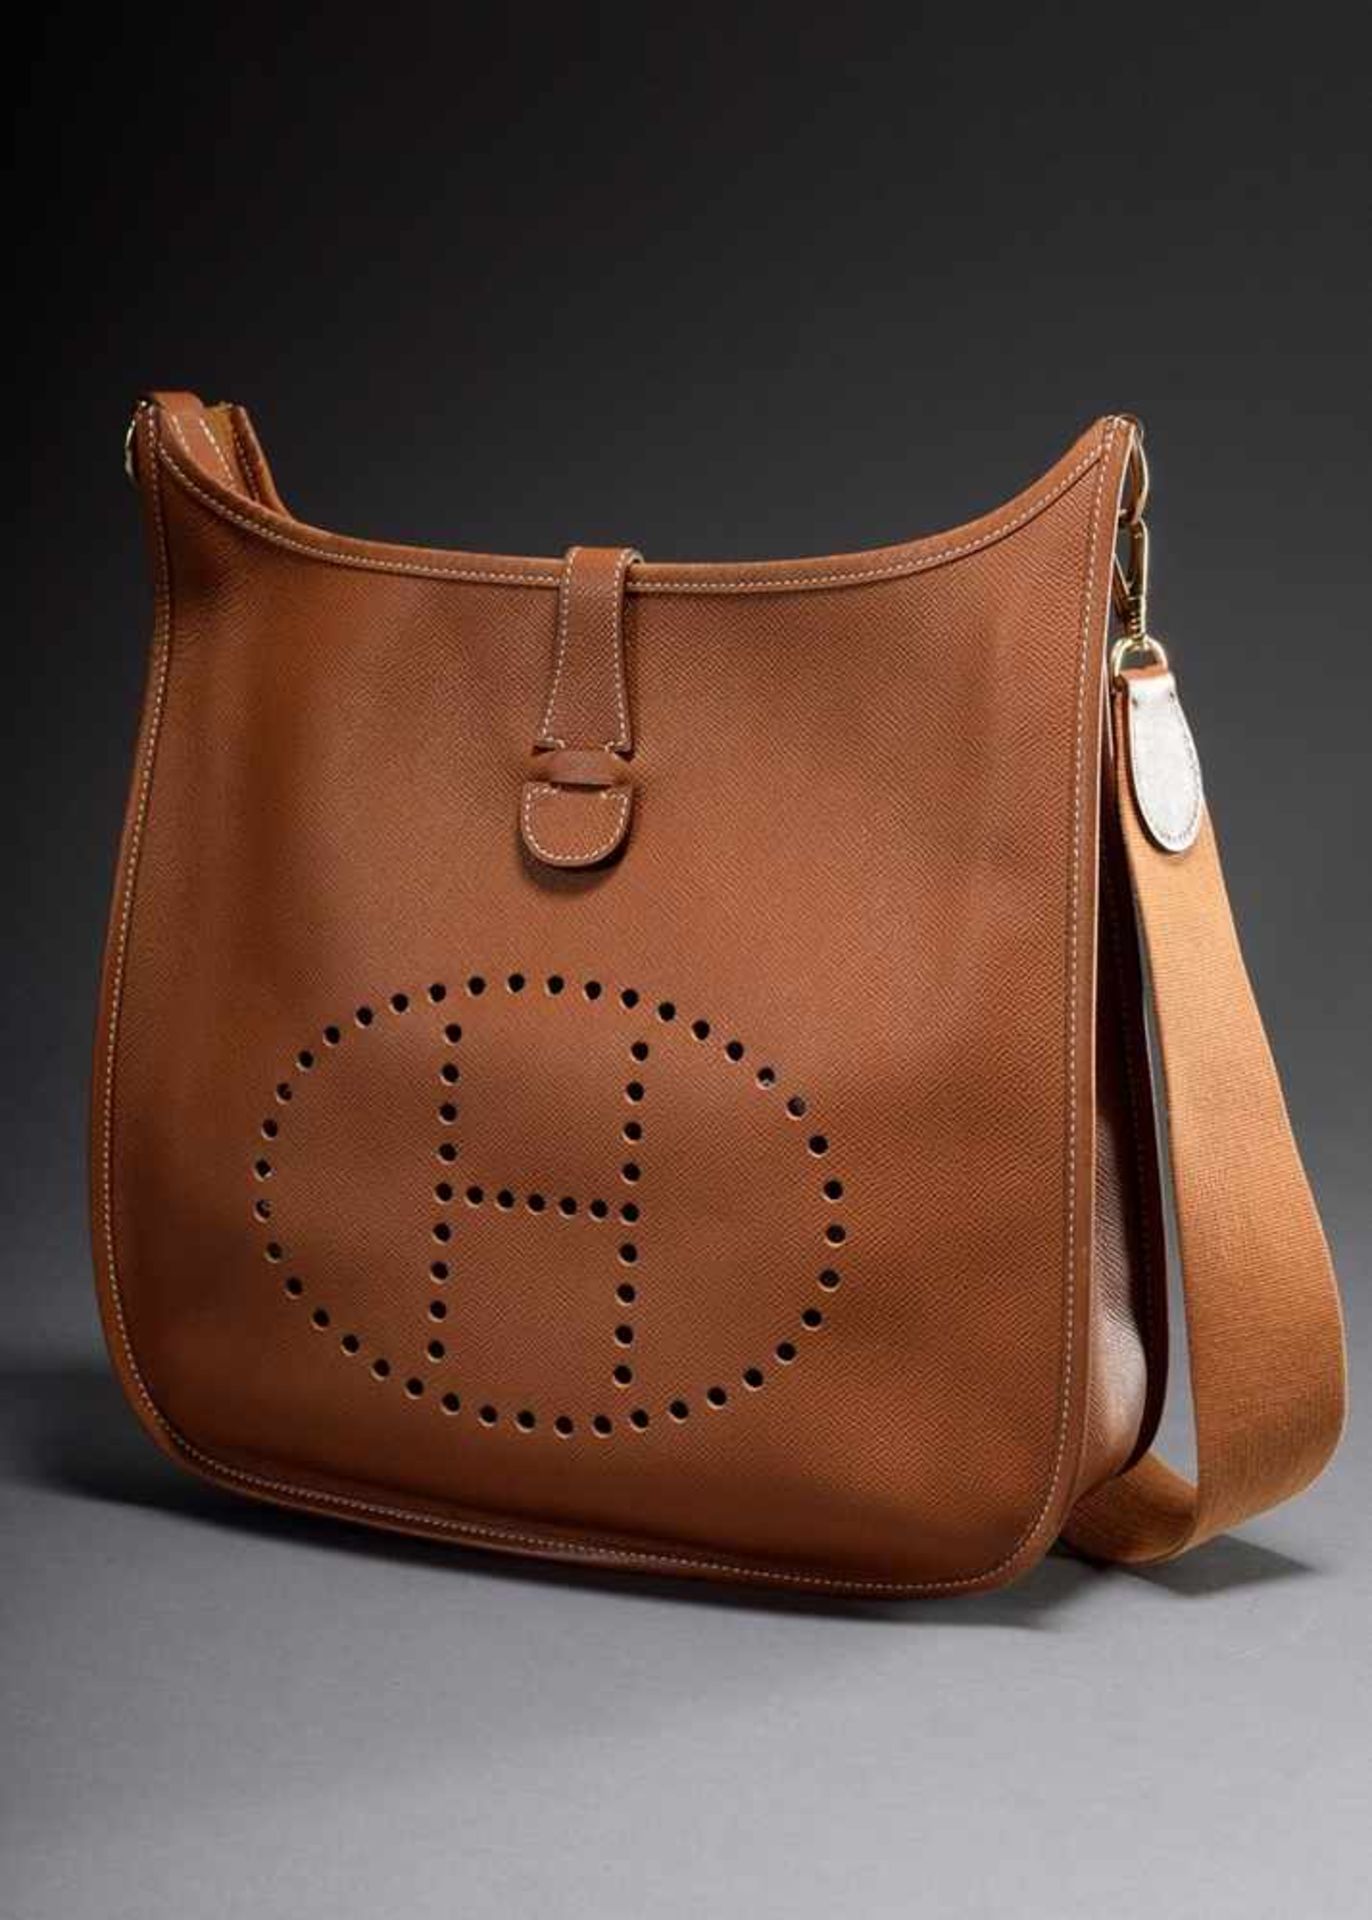 Hermès "Evelyn", 1996, cognac coloured calfskin, open shoulder bag with perforated "H" logo and - Bild 6 aus 9